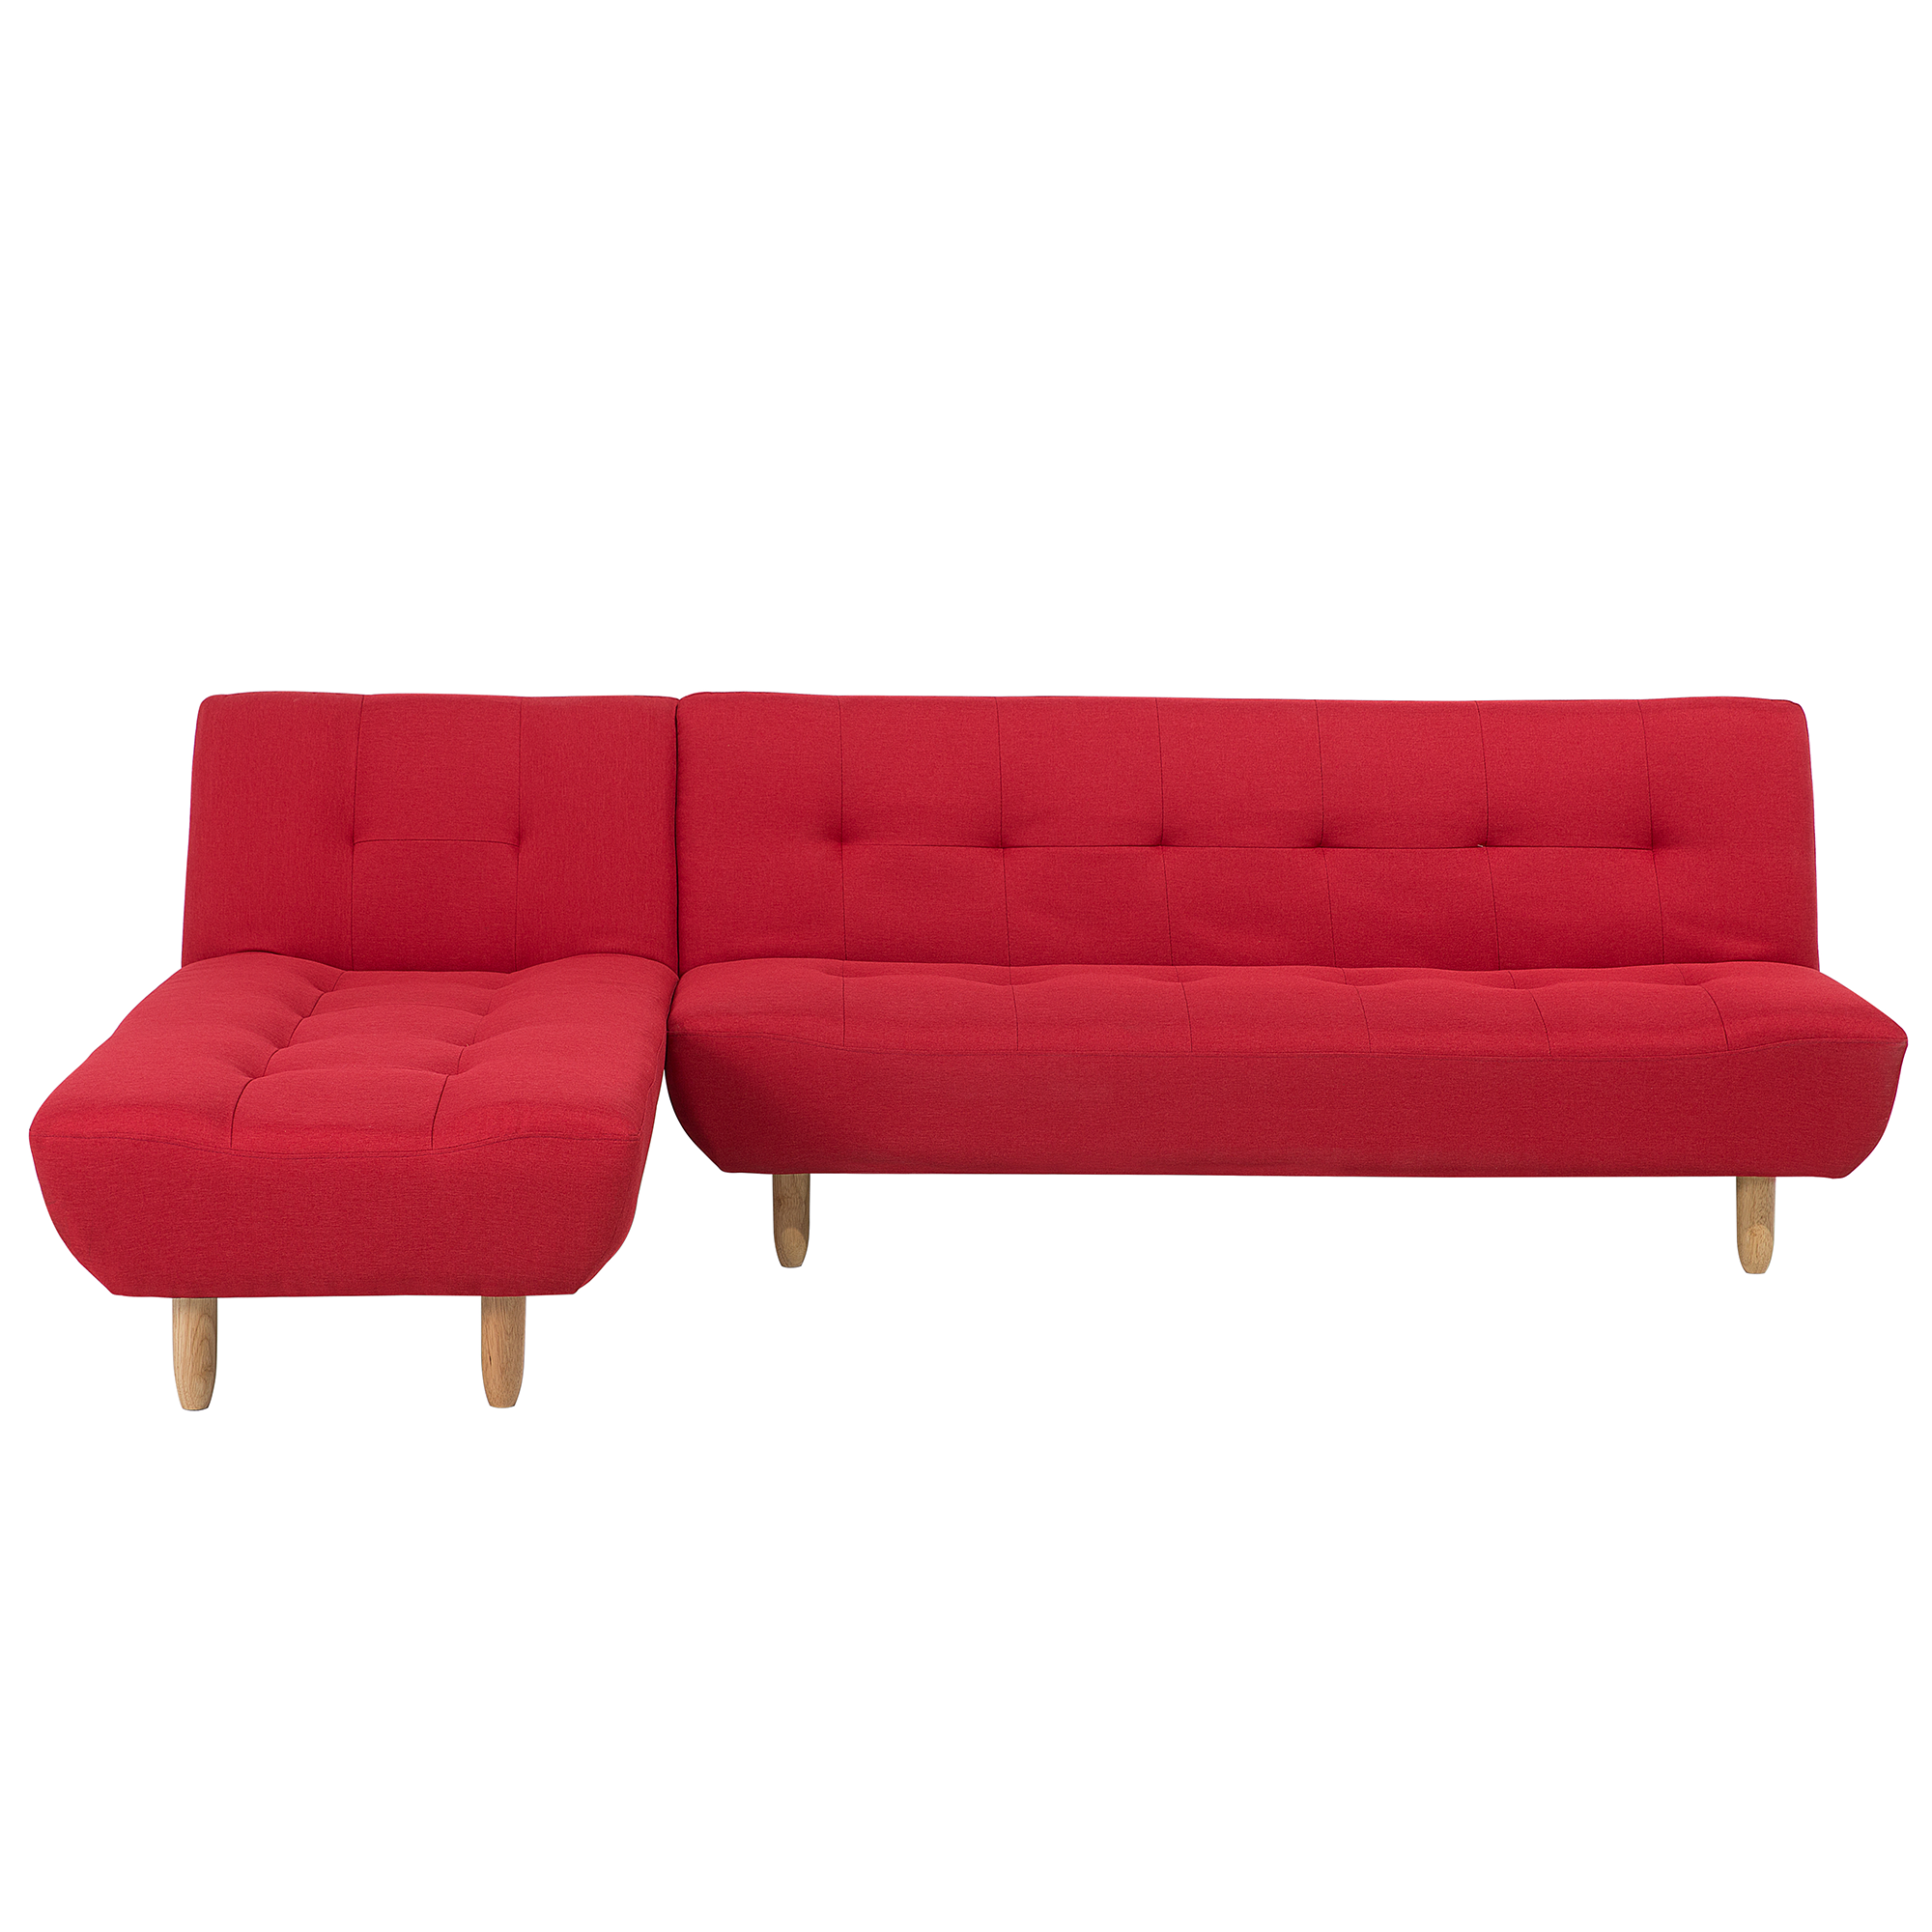 Beliani Corner Sofa Red Fabric Upholsery Light Wood Legs Right Hand Chaise Longue 3 Seater